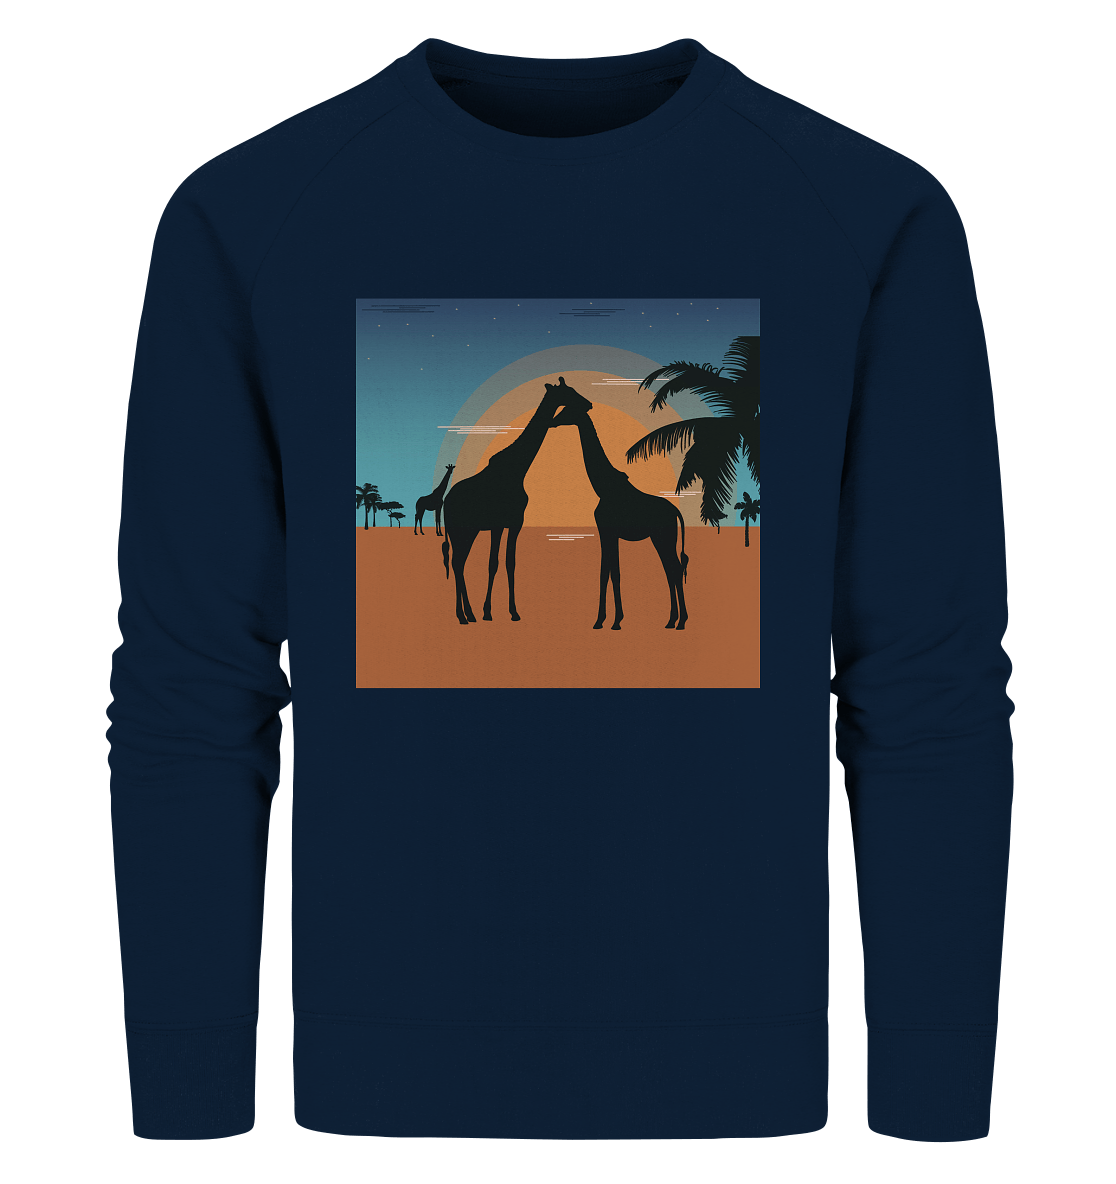 Bergmesch Herren Oberteil Sweatschirt mit Giraffen, Männertag